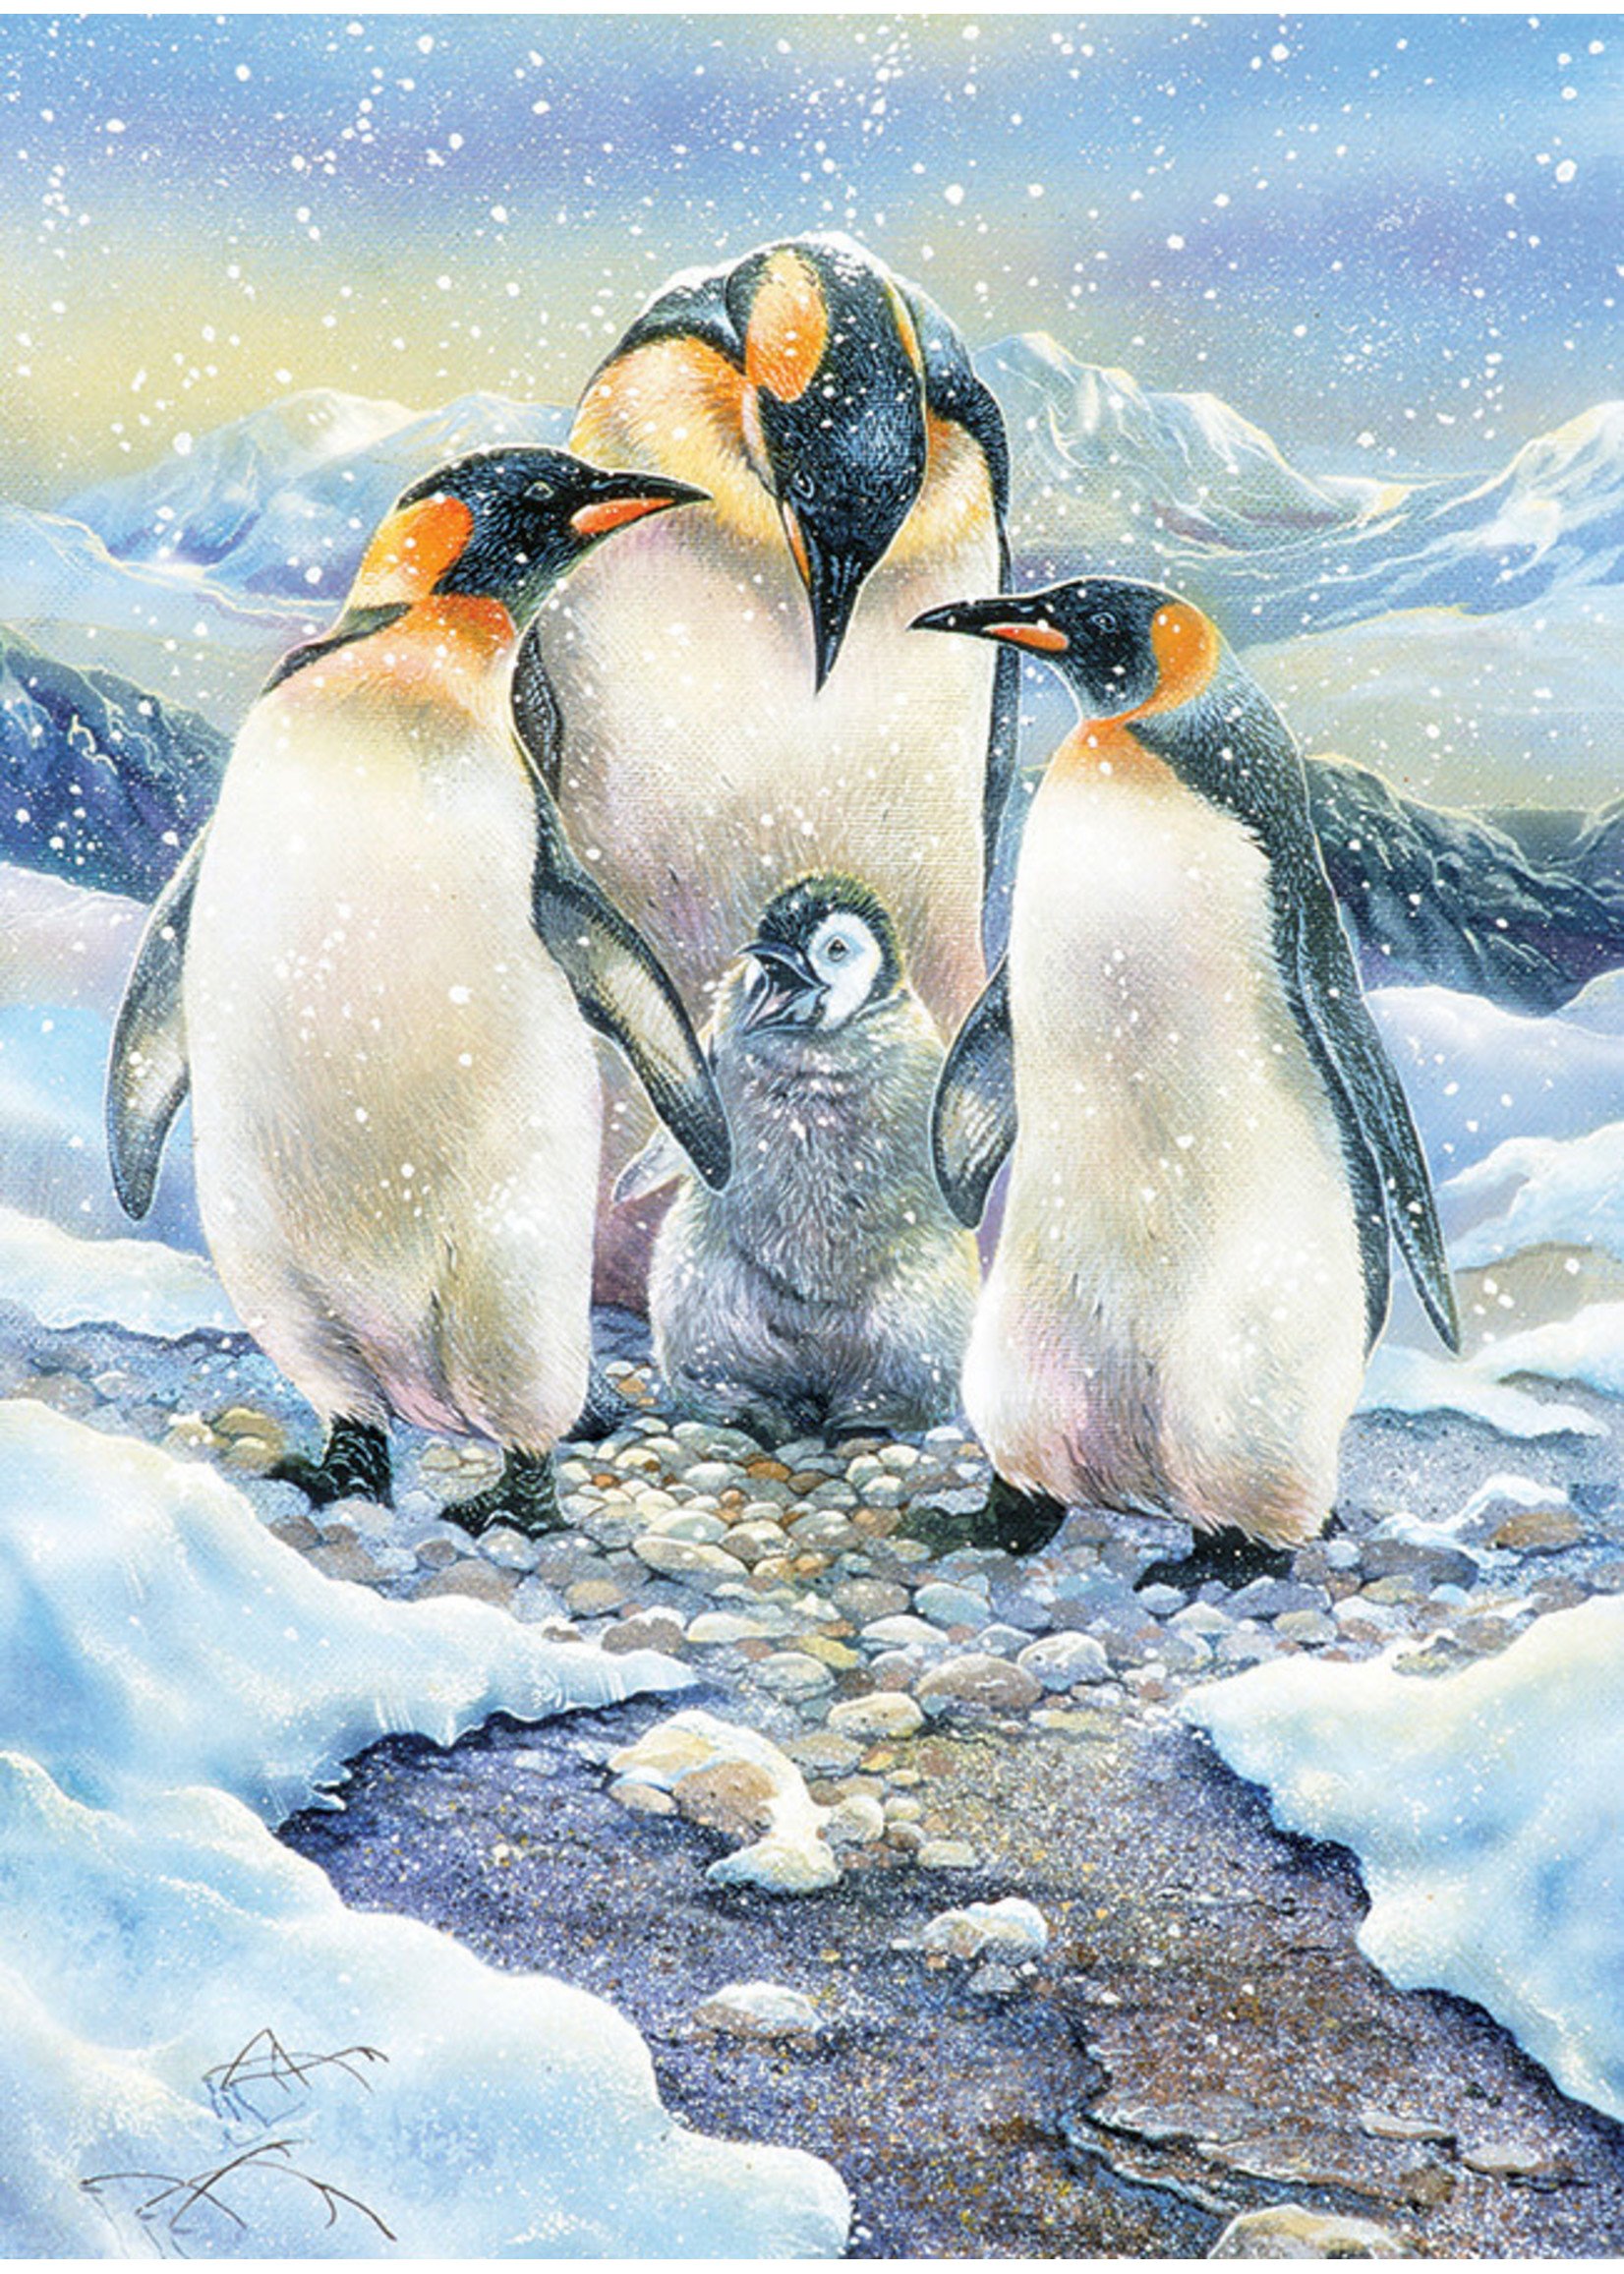 Cobble Hill Penguin Family Family Puzzle 350 Pieces